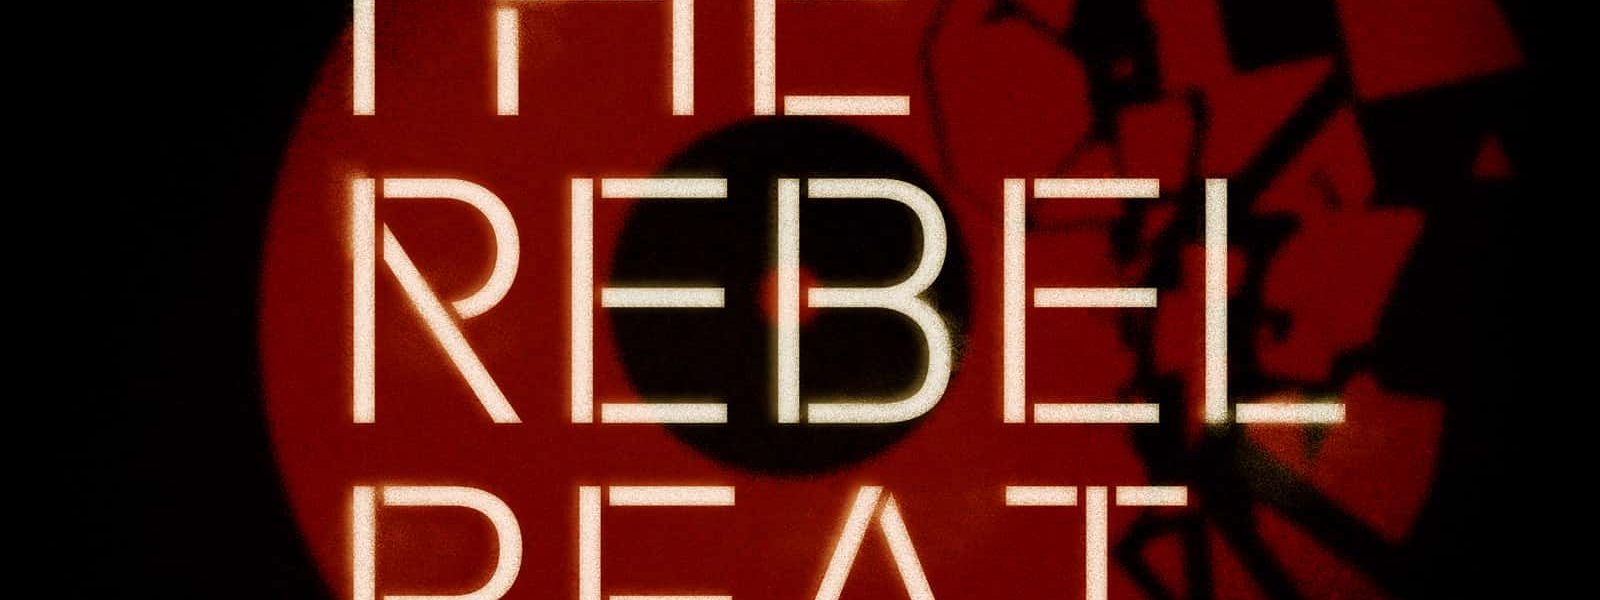 "The Rebel Beat" written over an exploding vinyl record